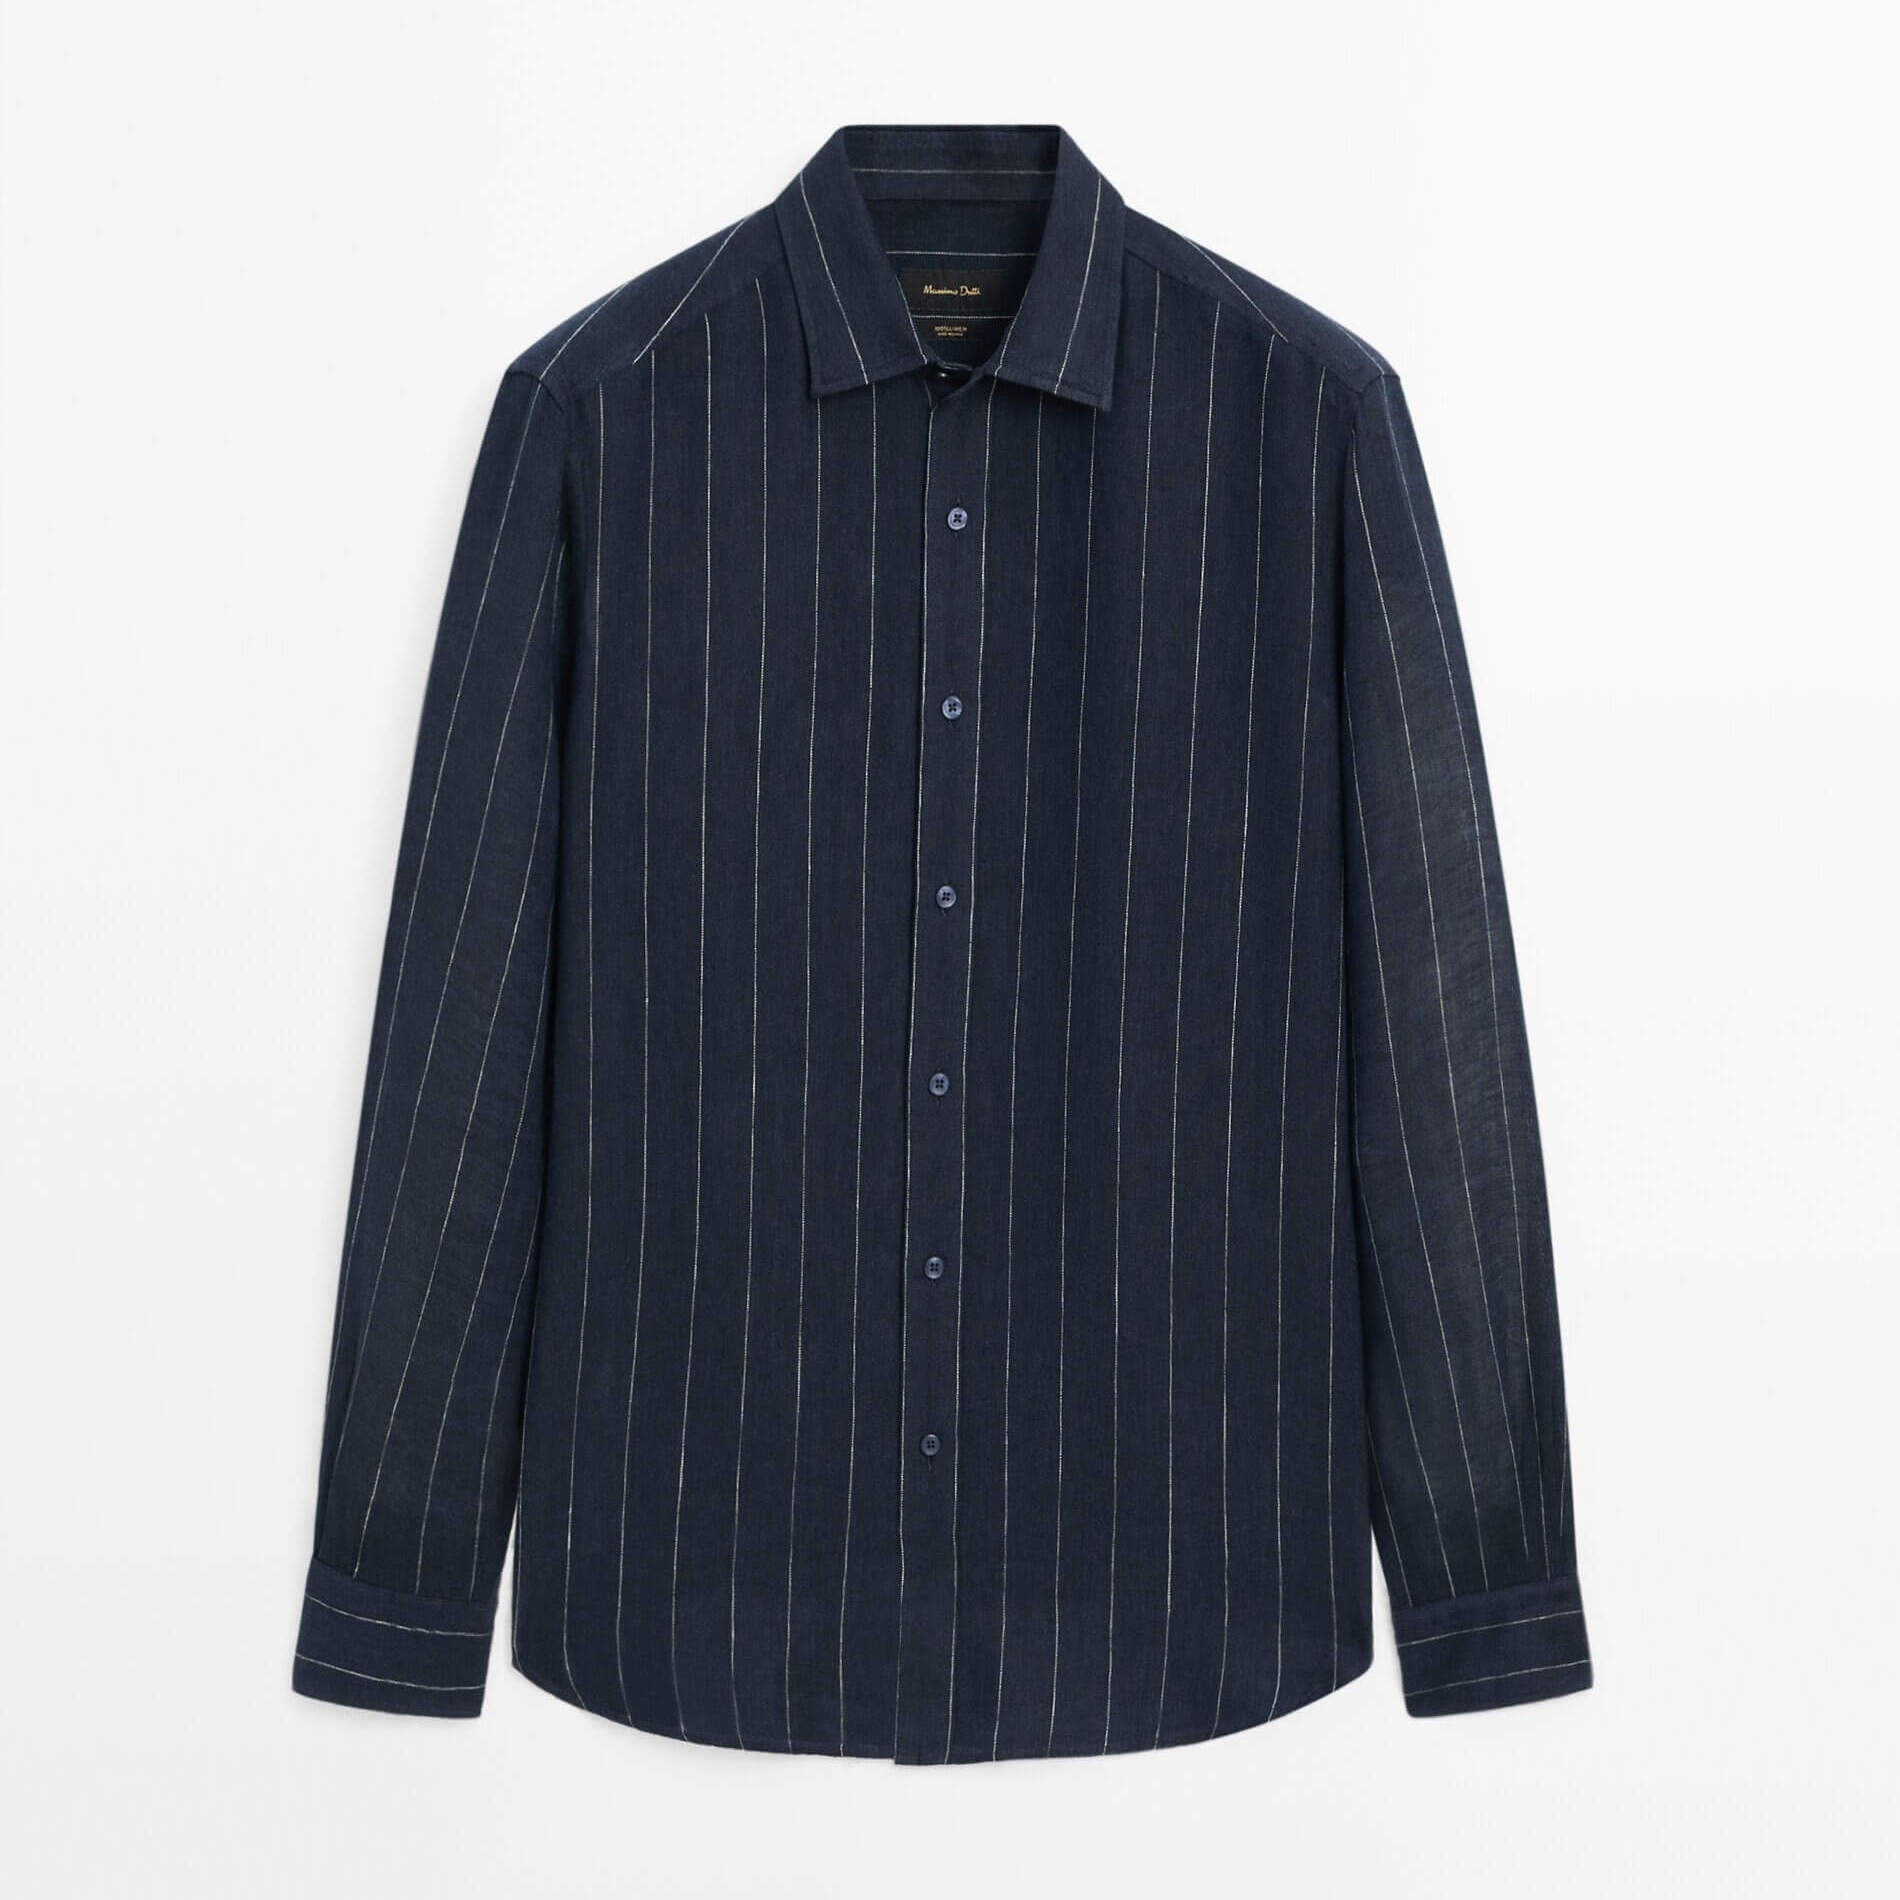 Рубашка Massimo Dutti 100% Linen Striped, синий рубашка uniqlo 100% linen striped белый синий